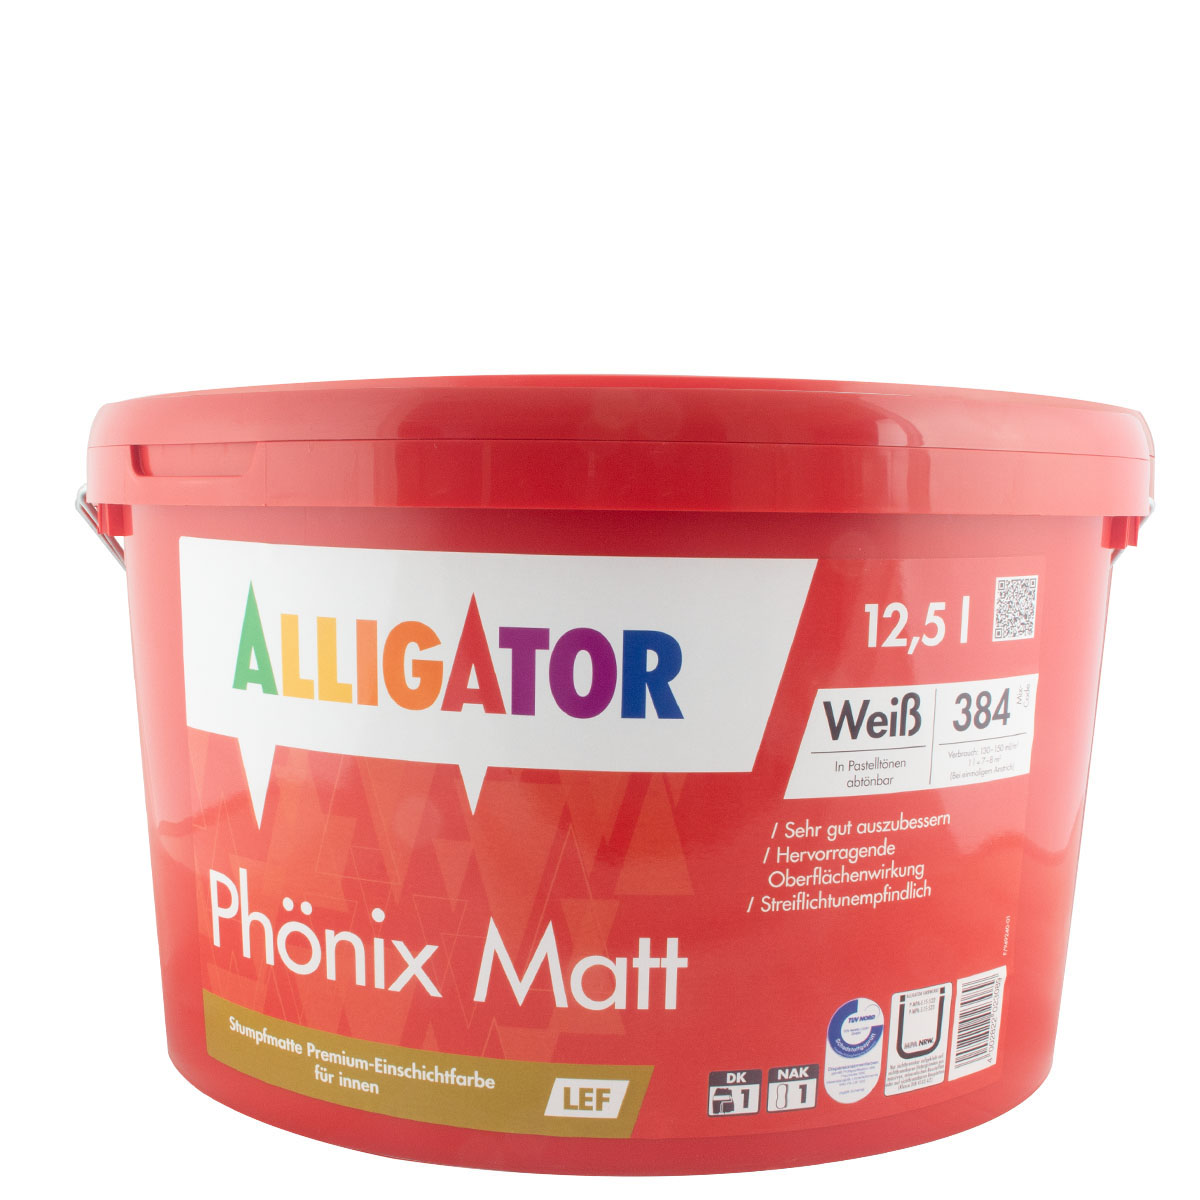 Alligator Phönix Matt 12,5L LEF weiß, Premium-Wandfinish